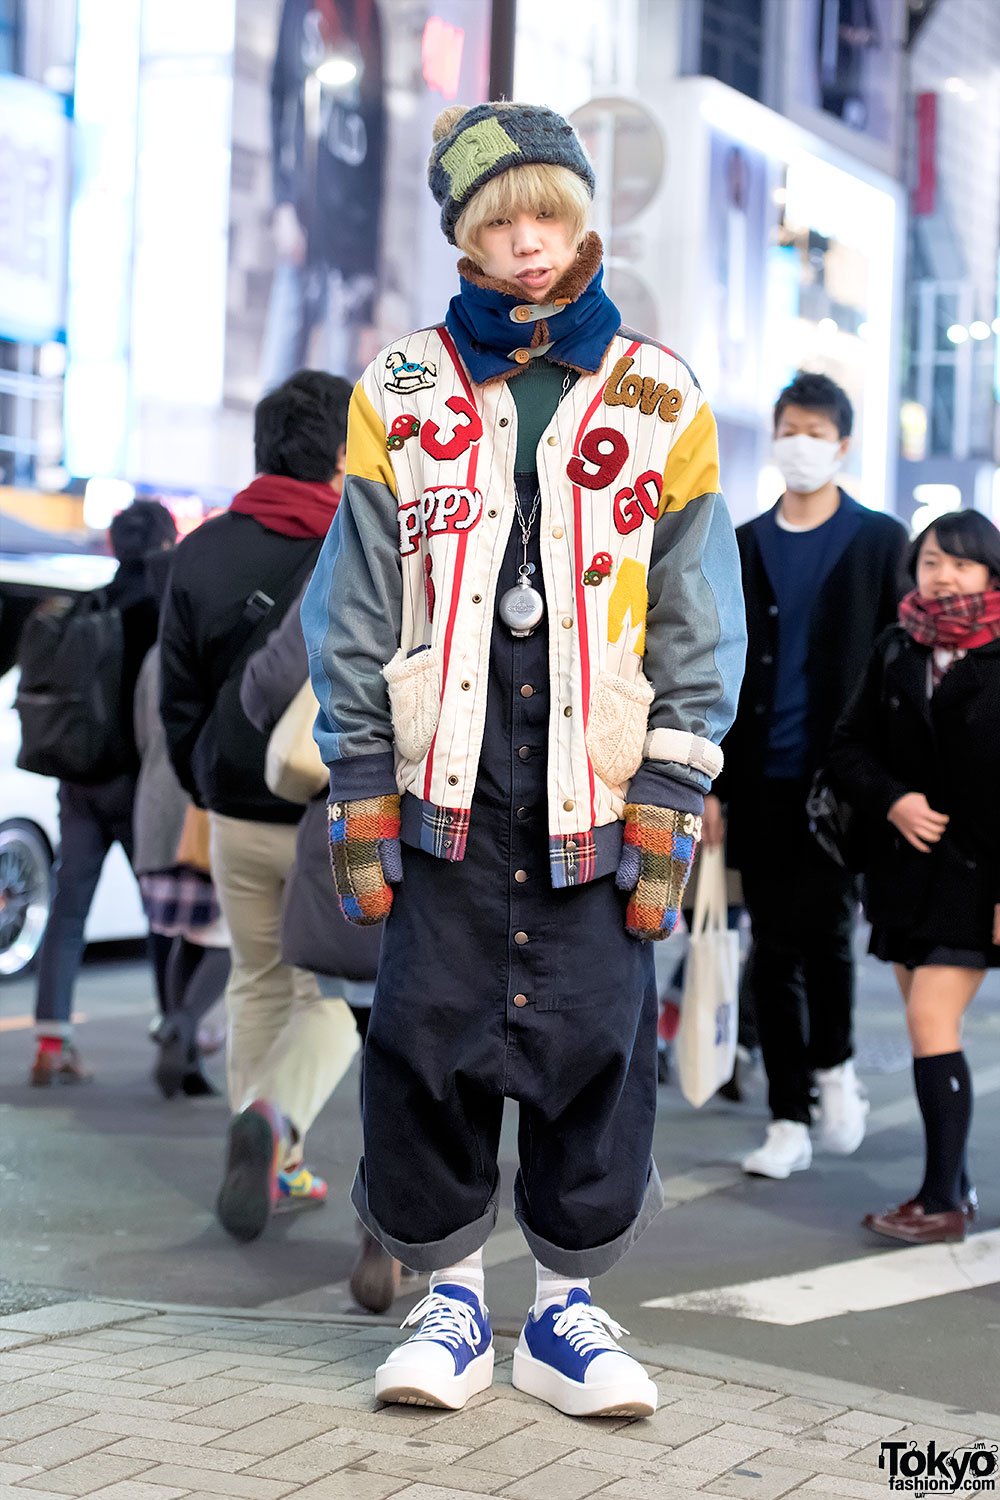 Tokyo Fashion on X: Harajuku guy in HEIHEI jacket, Christopher